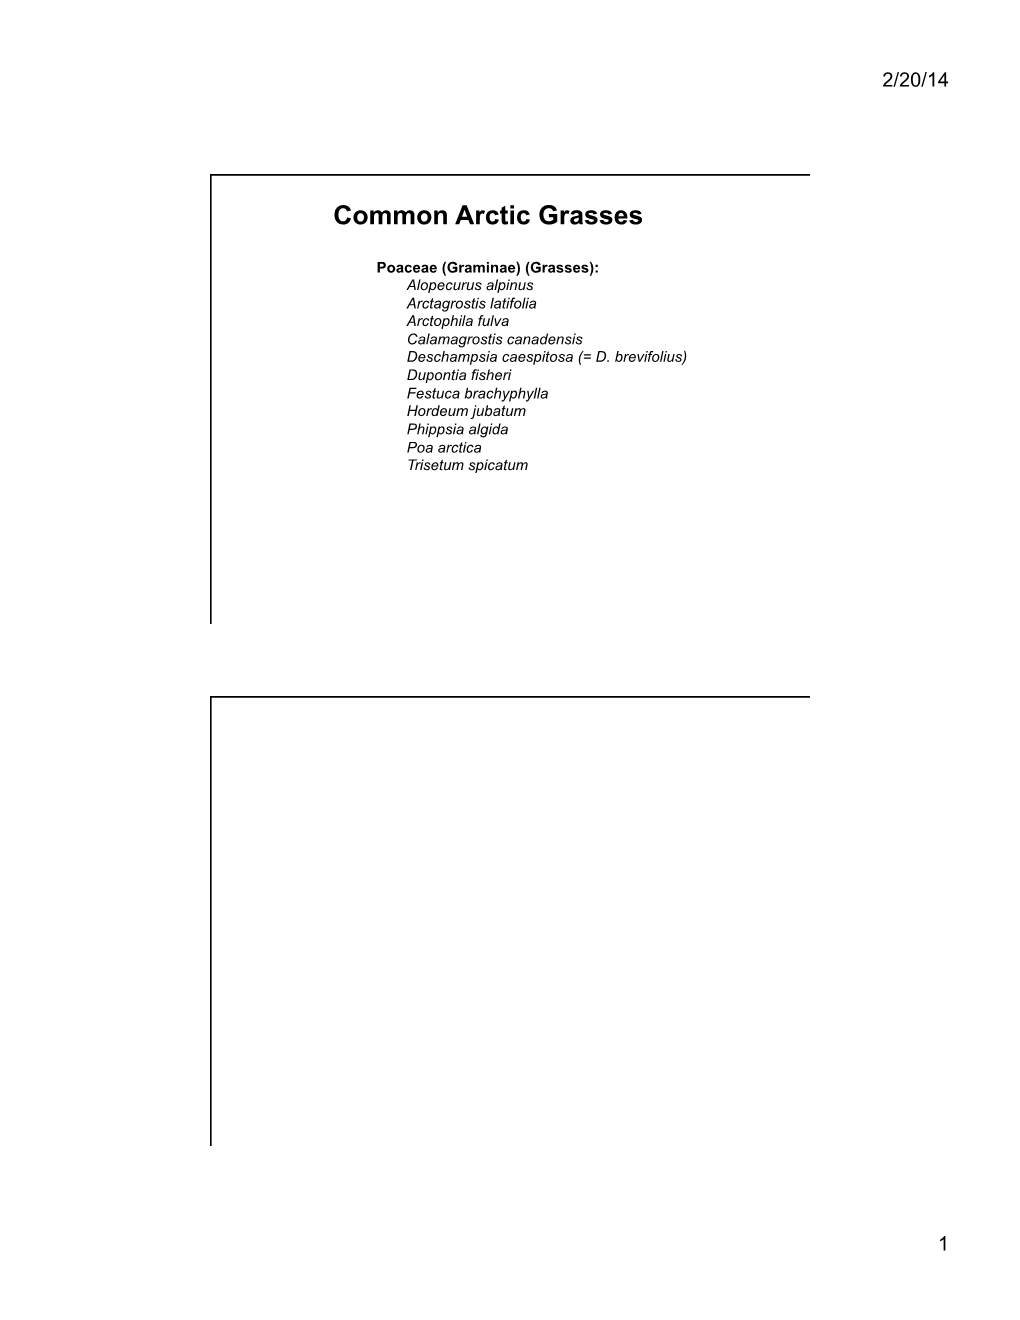 Common Arctic Grasses